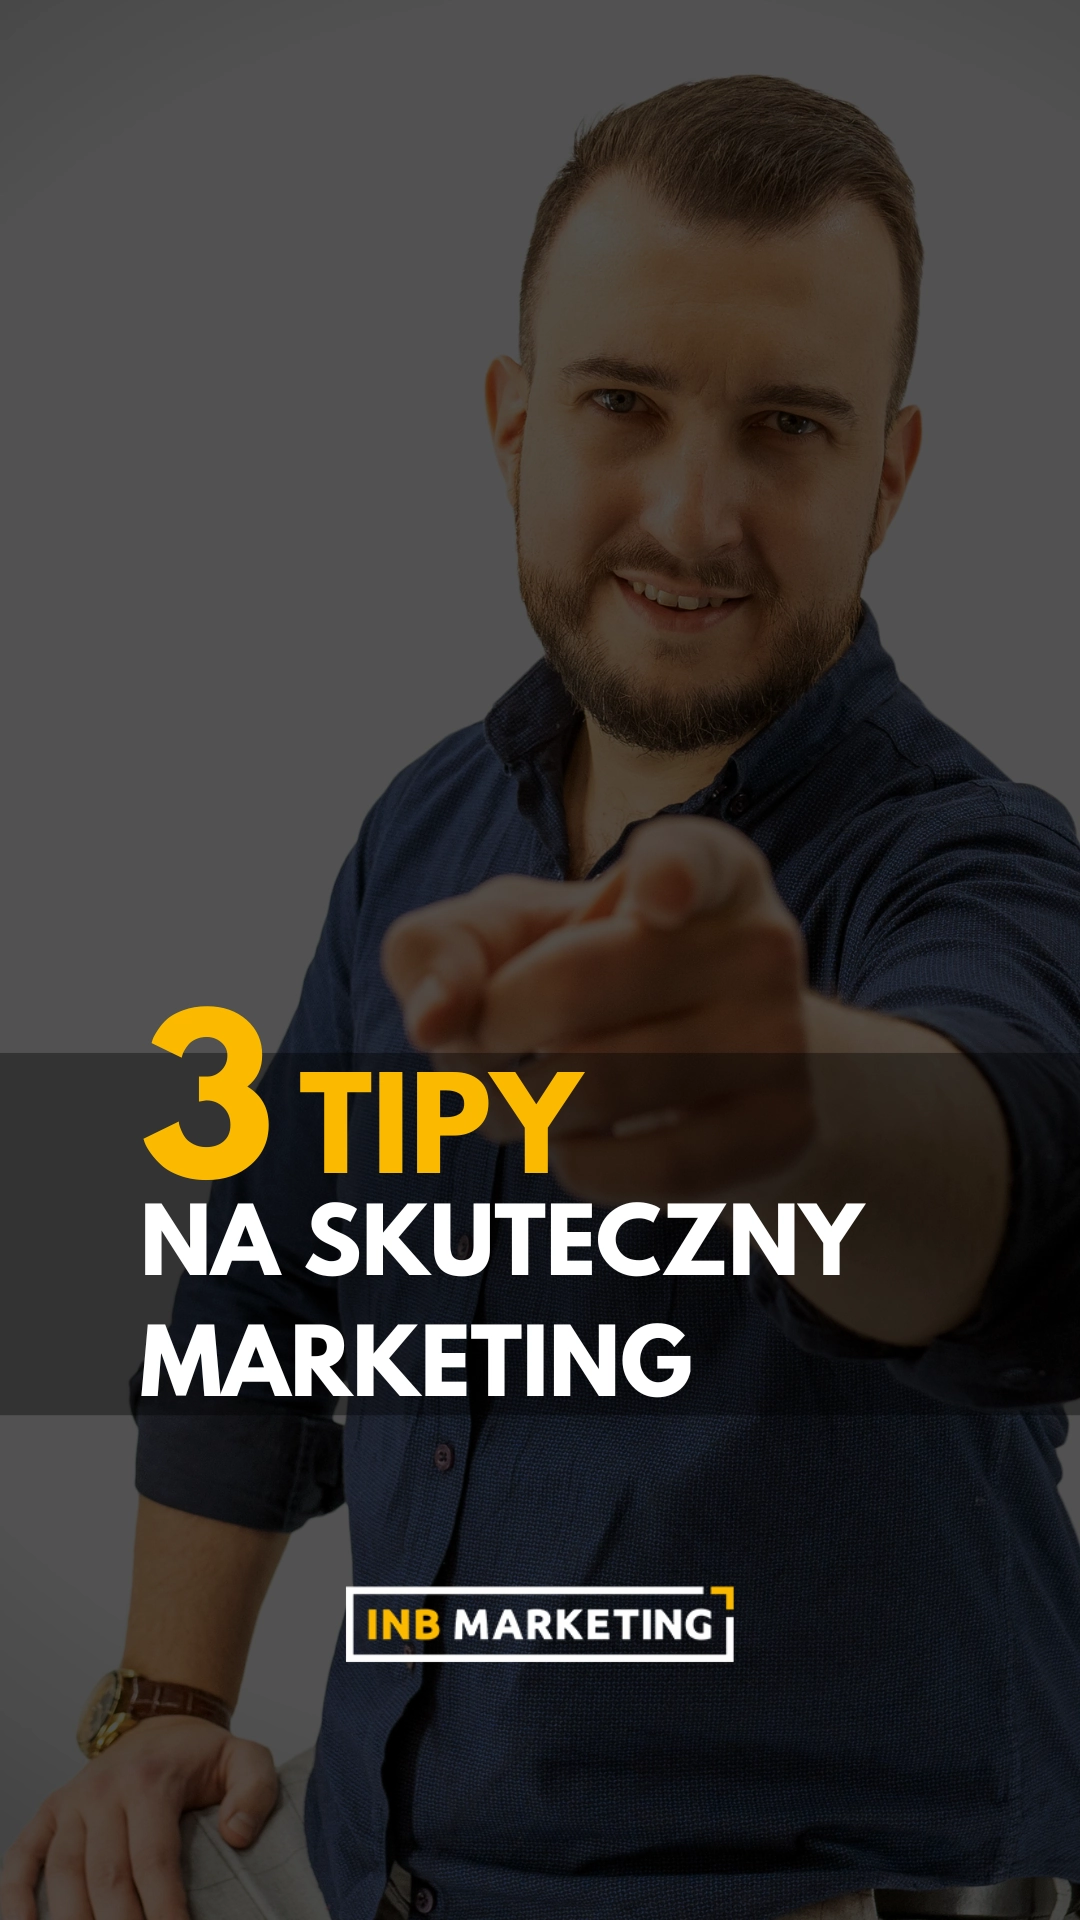 3 tipy na skuteczny marketing